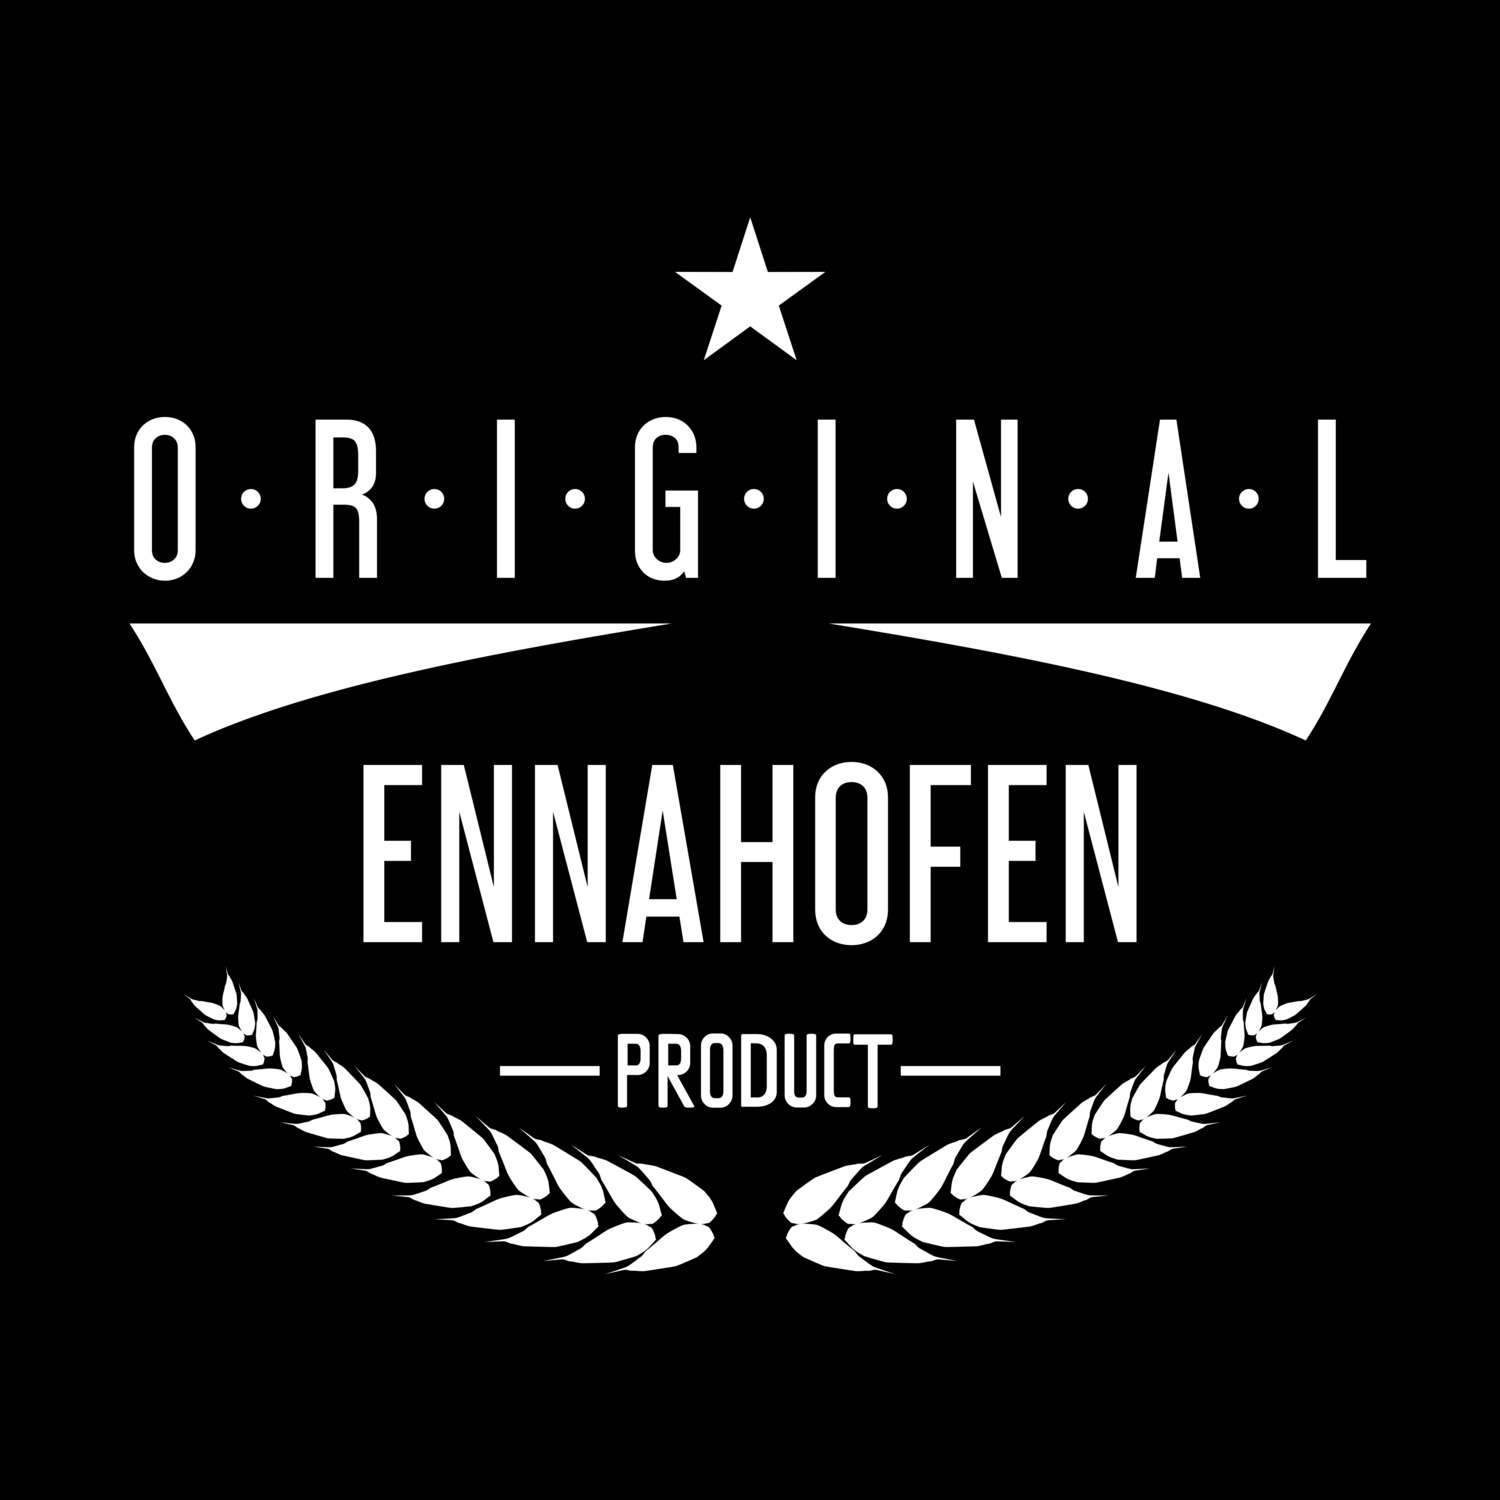 Ennahofen T-Shirt »Original Product«